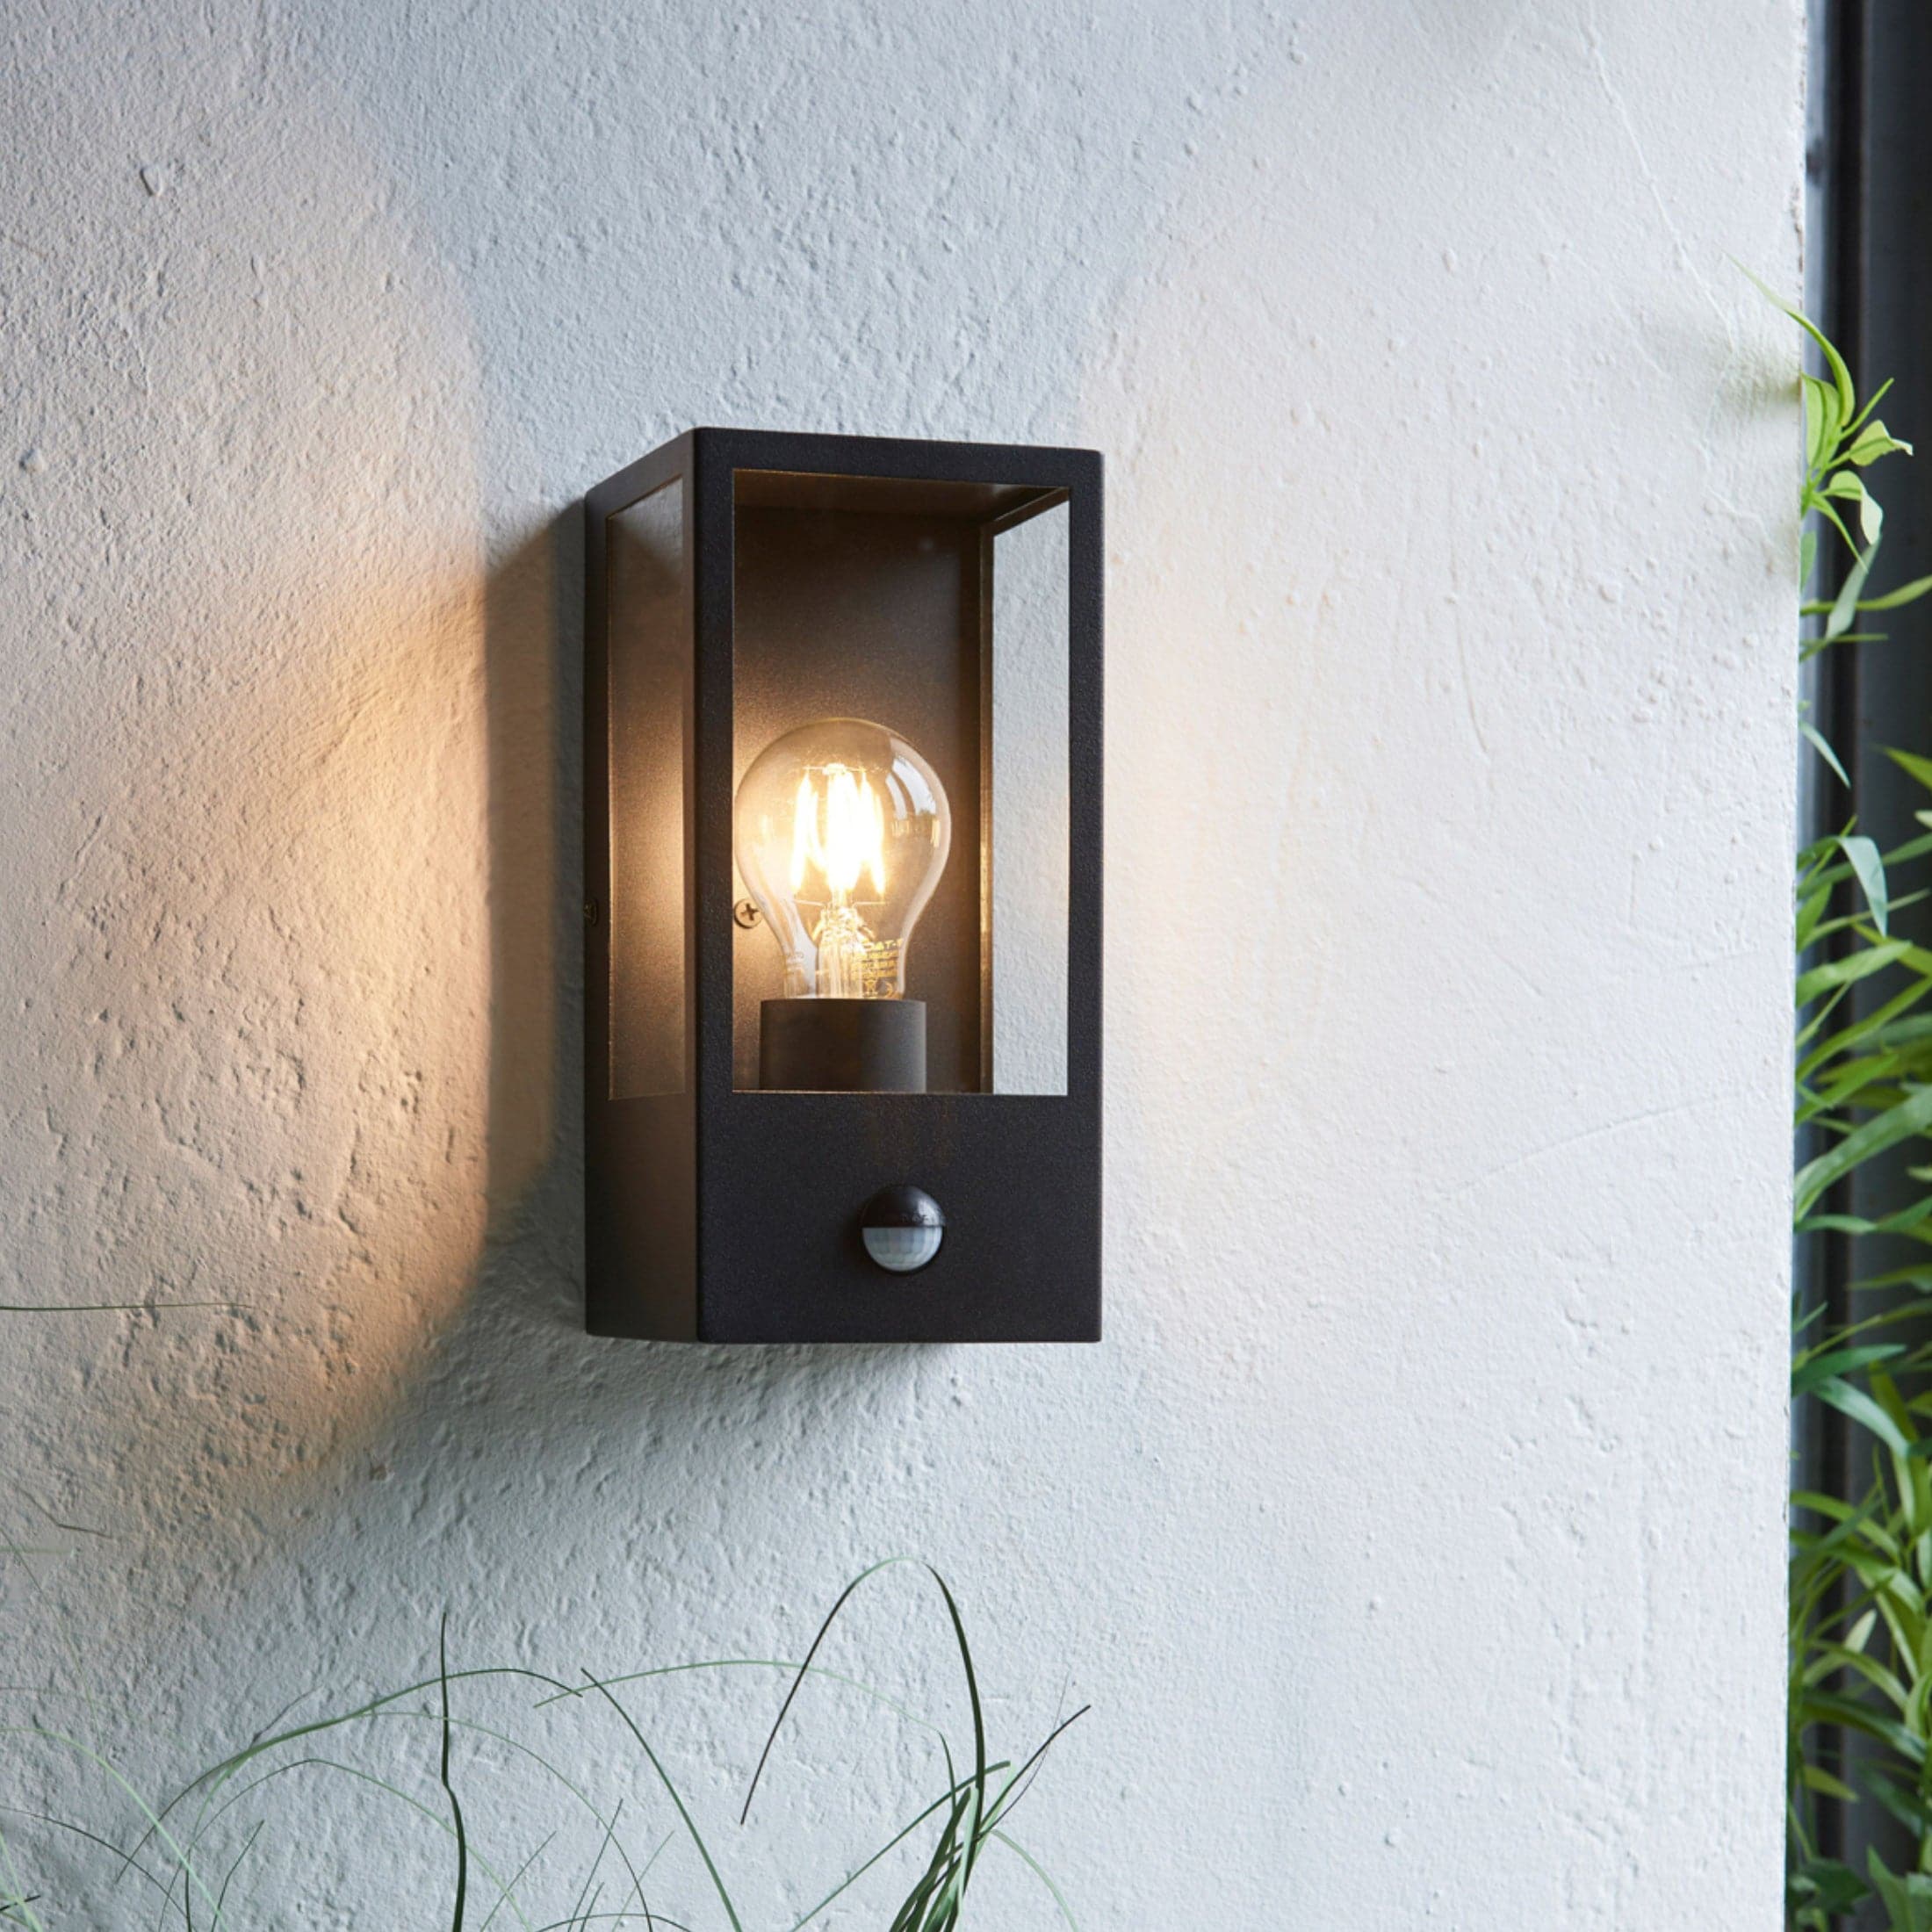 Outdoor Matt Black Box Lantern Wall Light with PIR Sensor